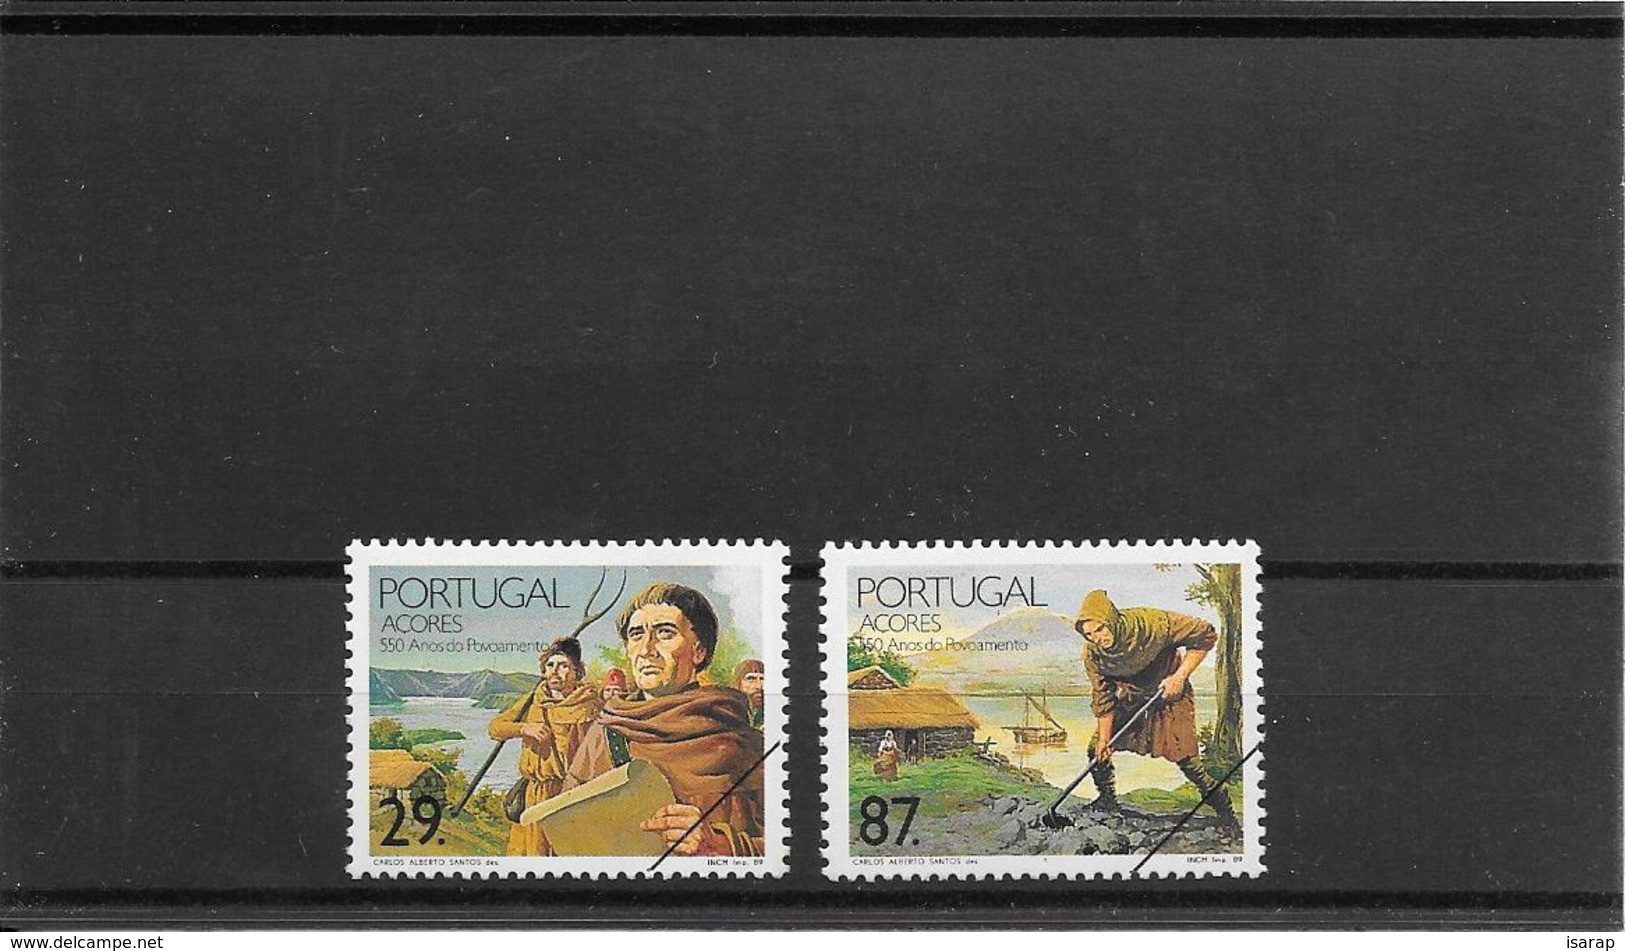 PROOF - 1989 - Povoamento Dos Açores - Unused Stamps